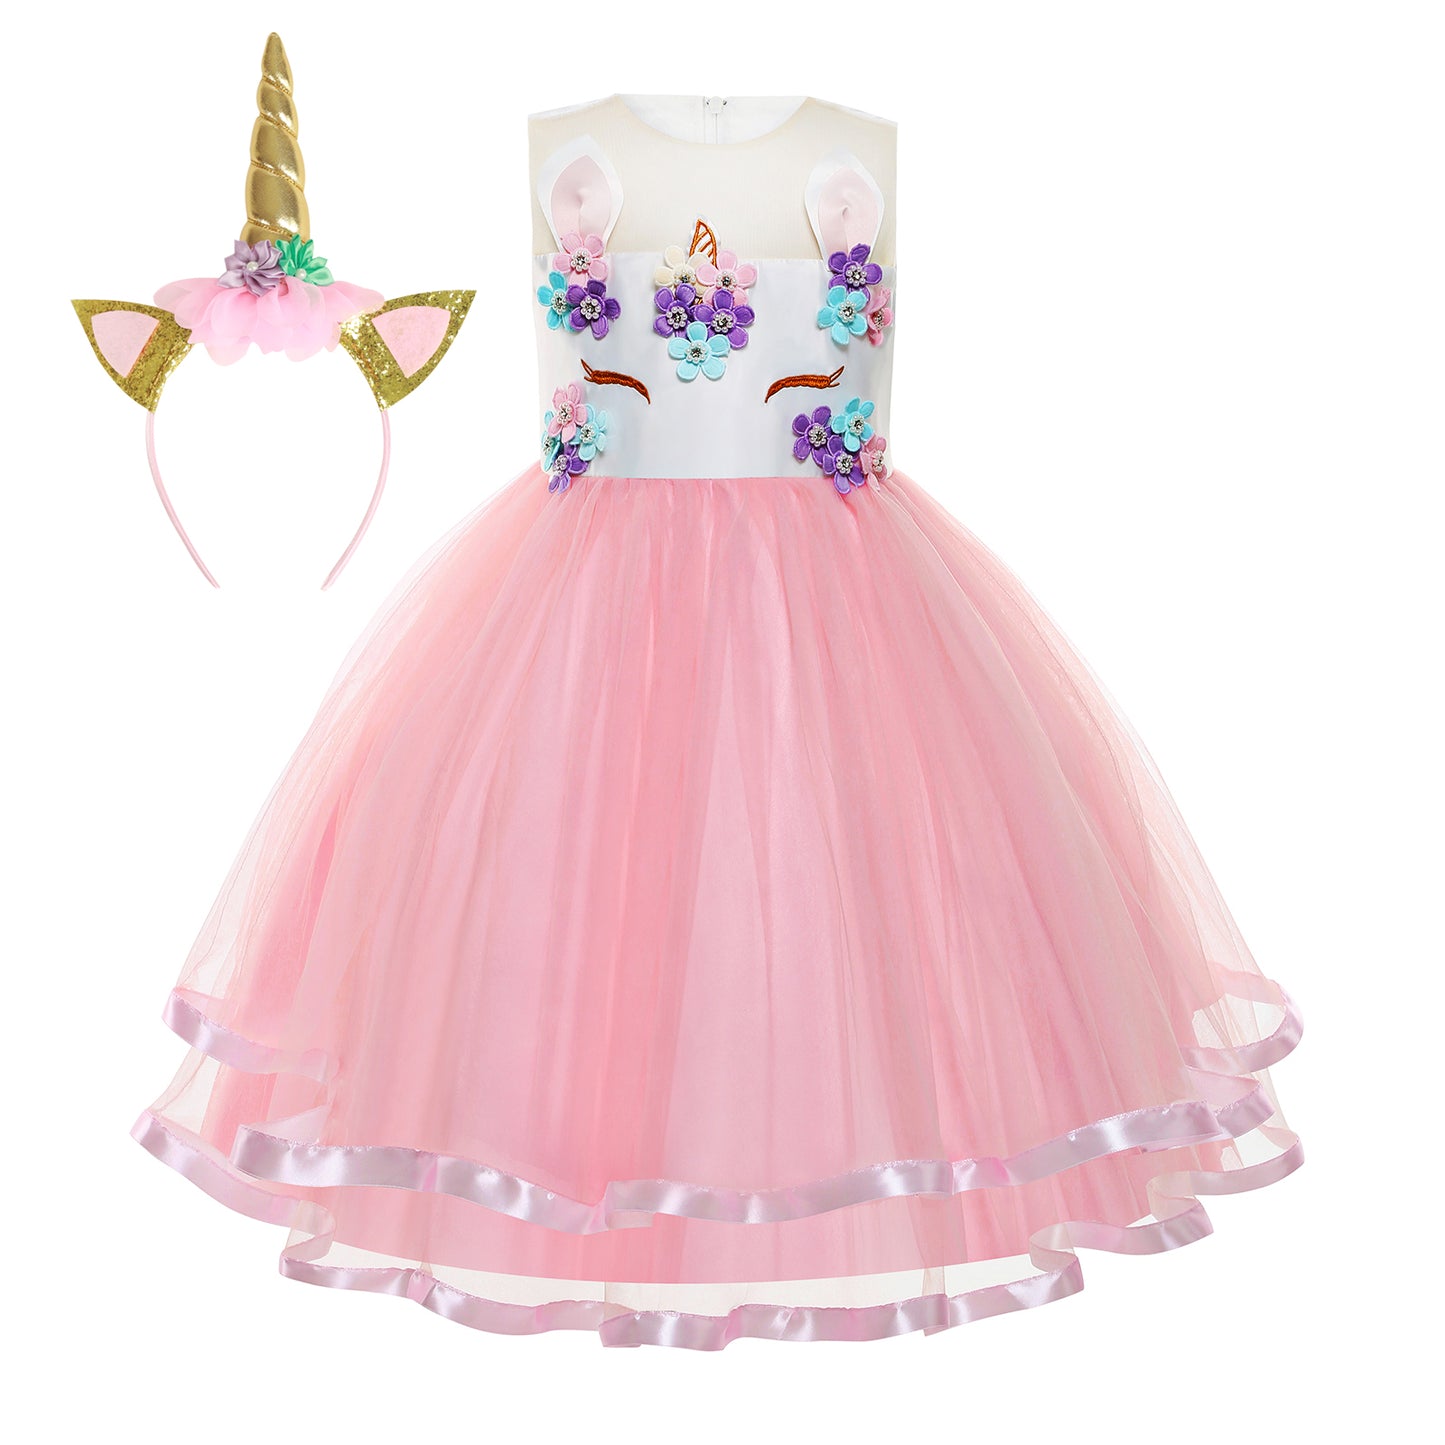 Foierp Girls Cosplay Costume - Fancy Princess Dress with Headband